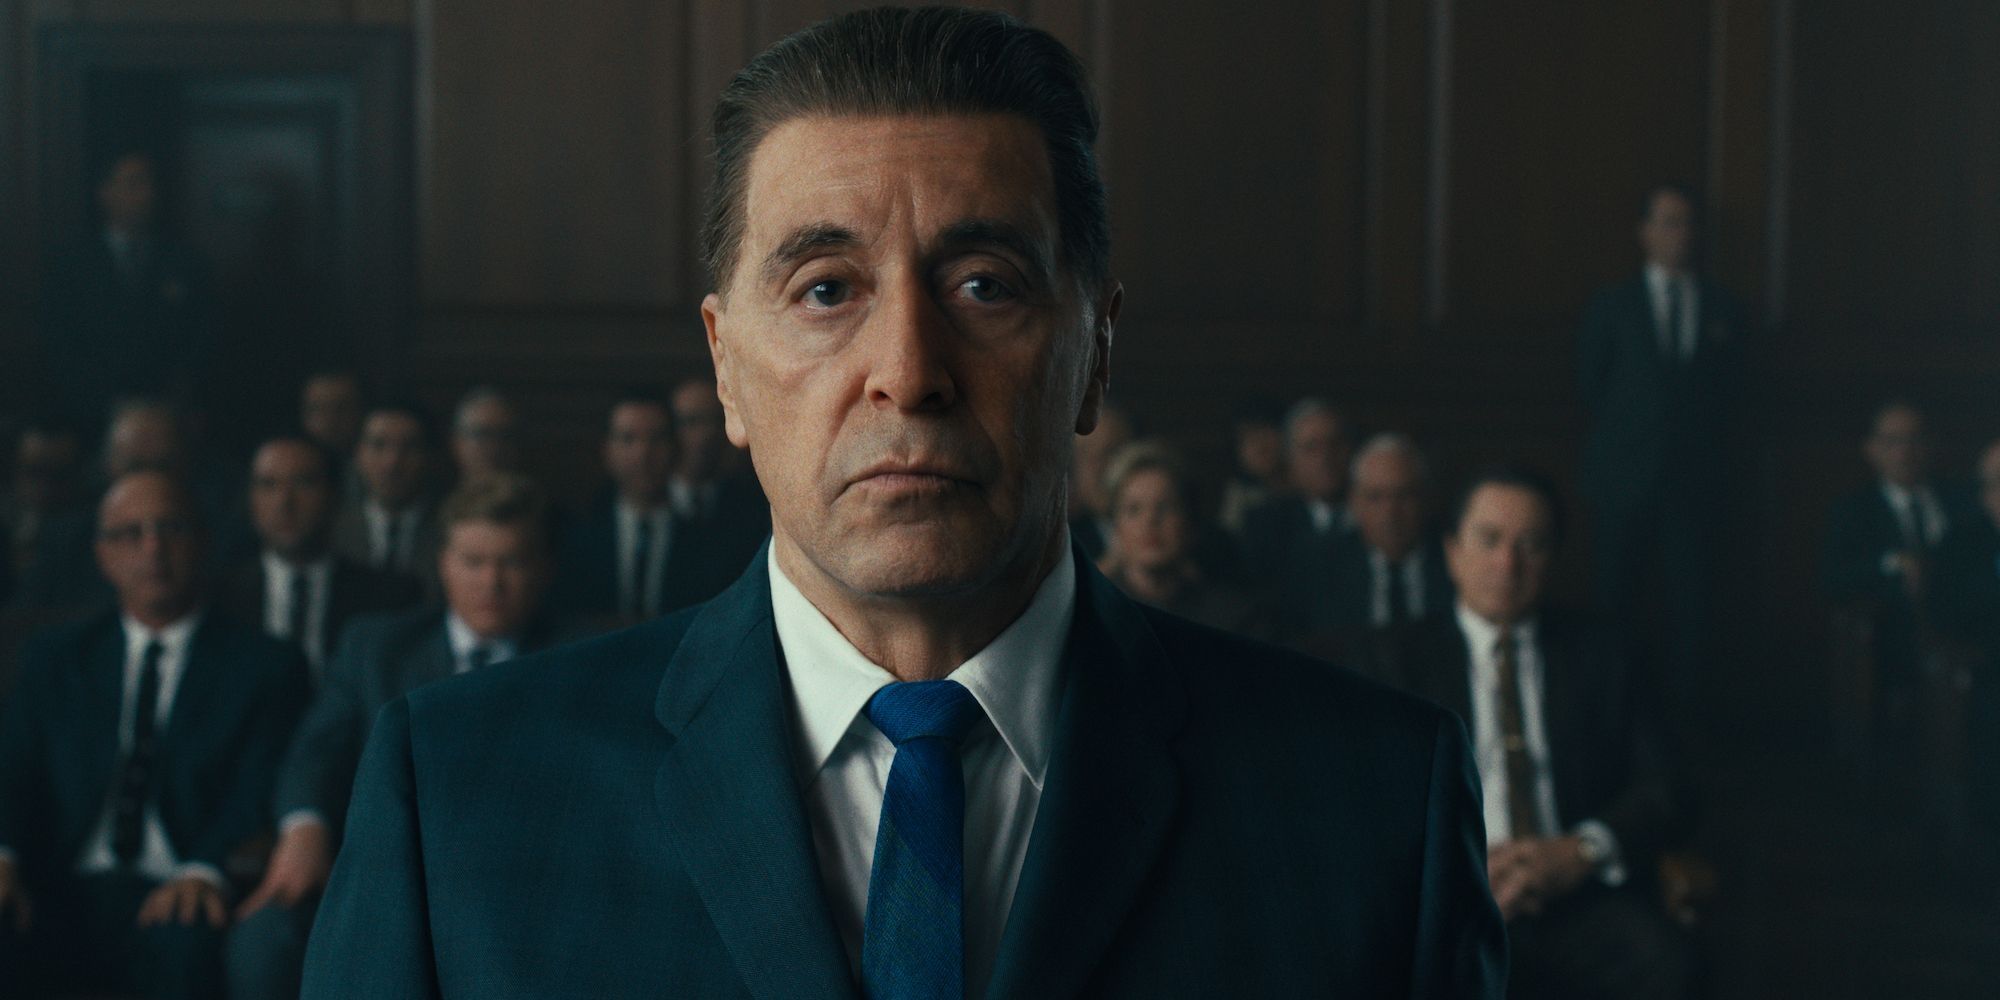 Al Pacino in court in The Irishman